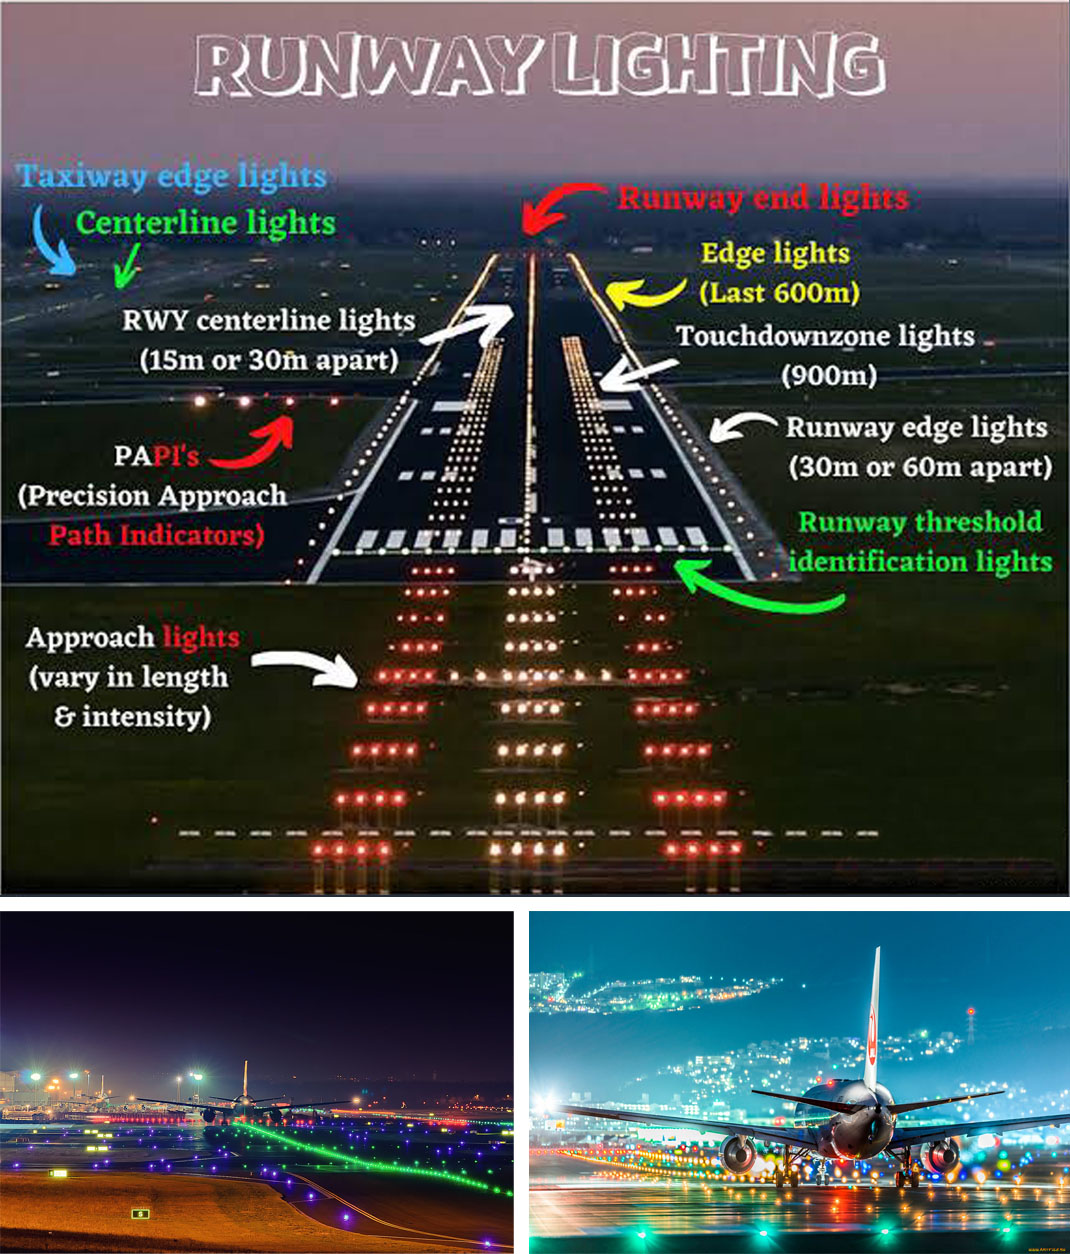 Embedded runway light